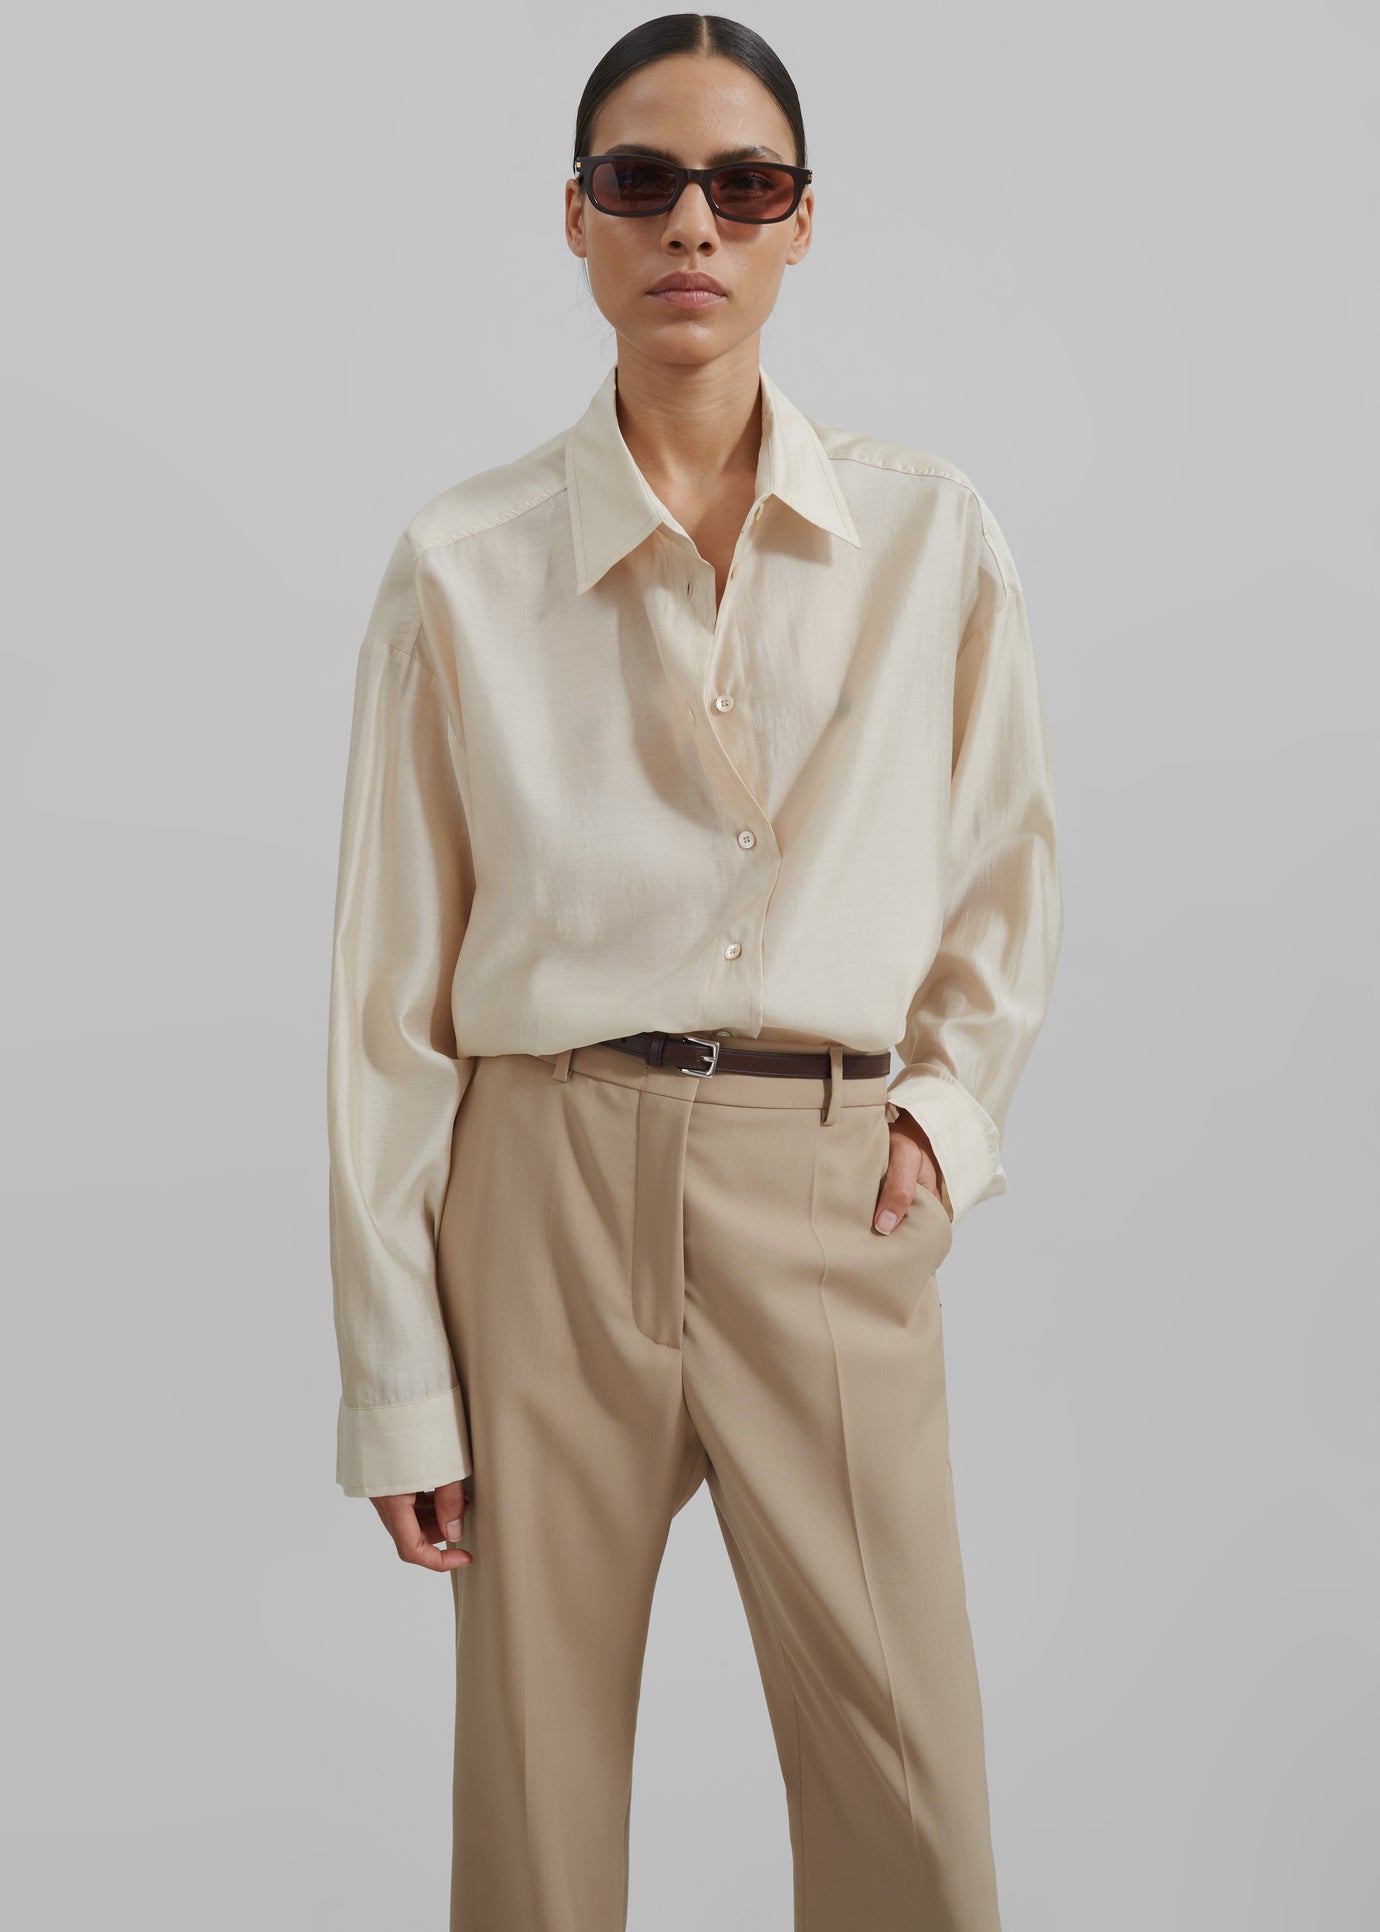 Ola Semi-Sheer Button Up Shirt - Ivory